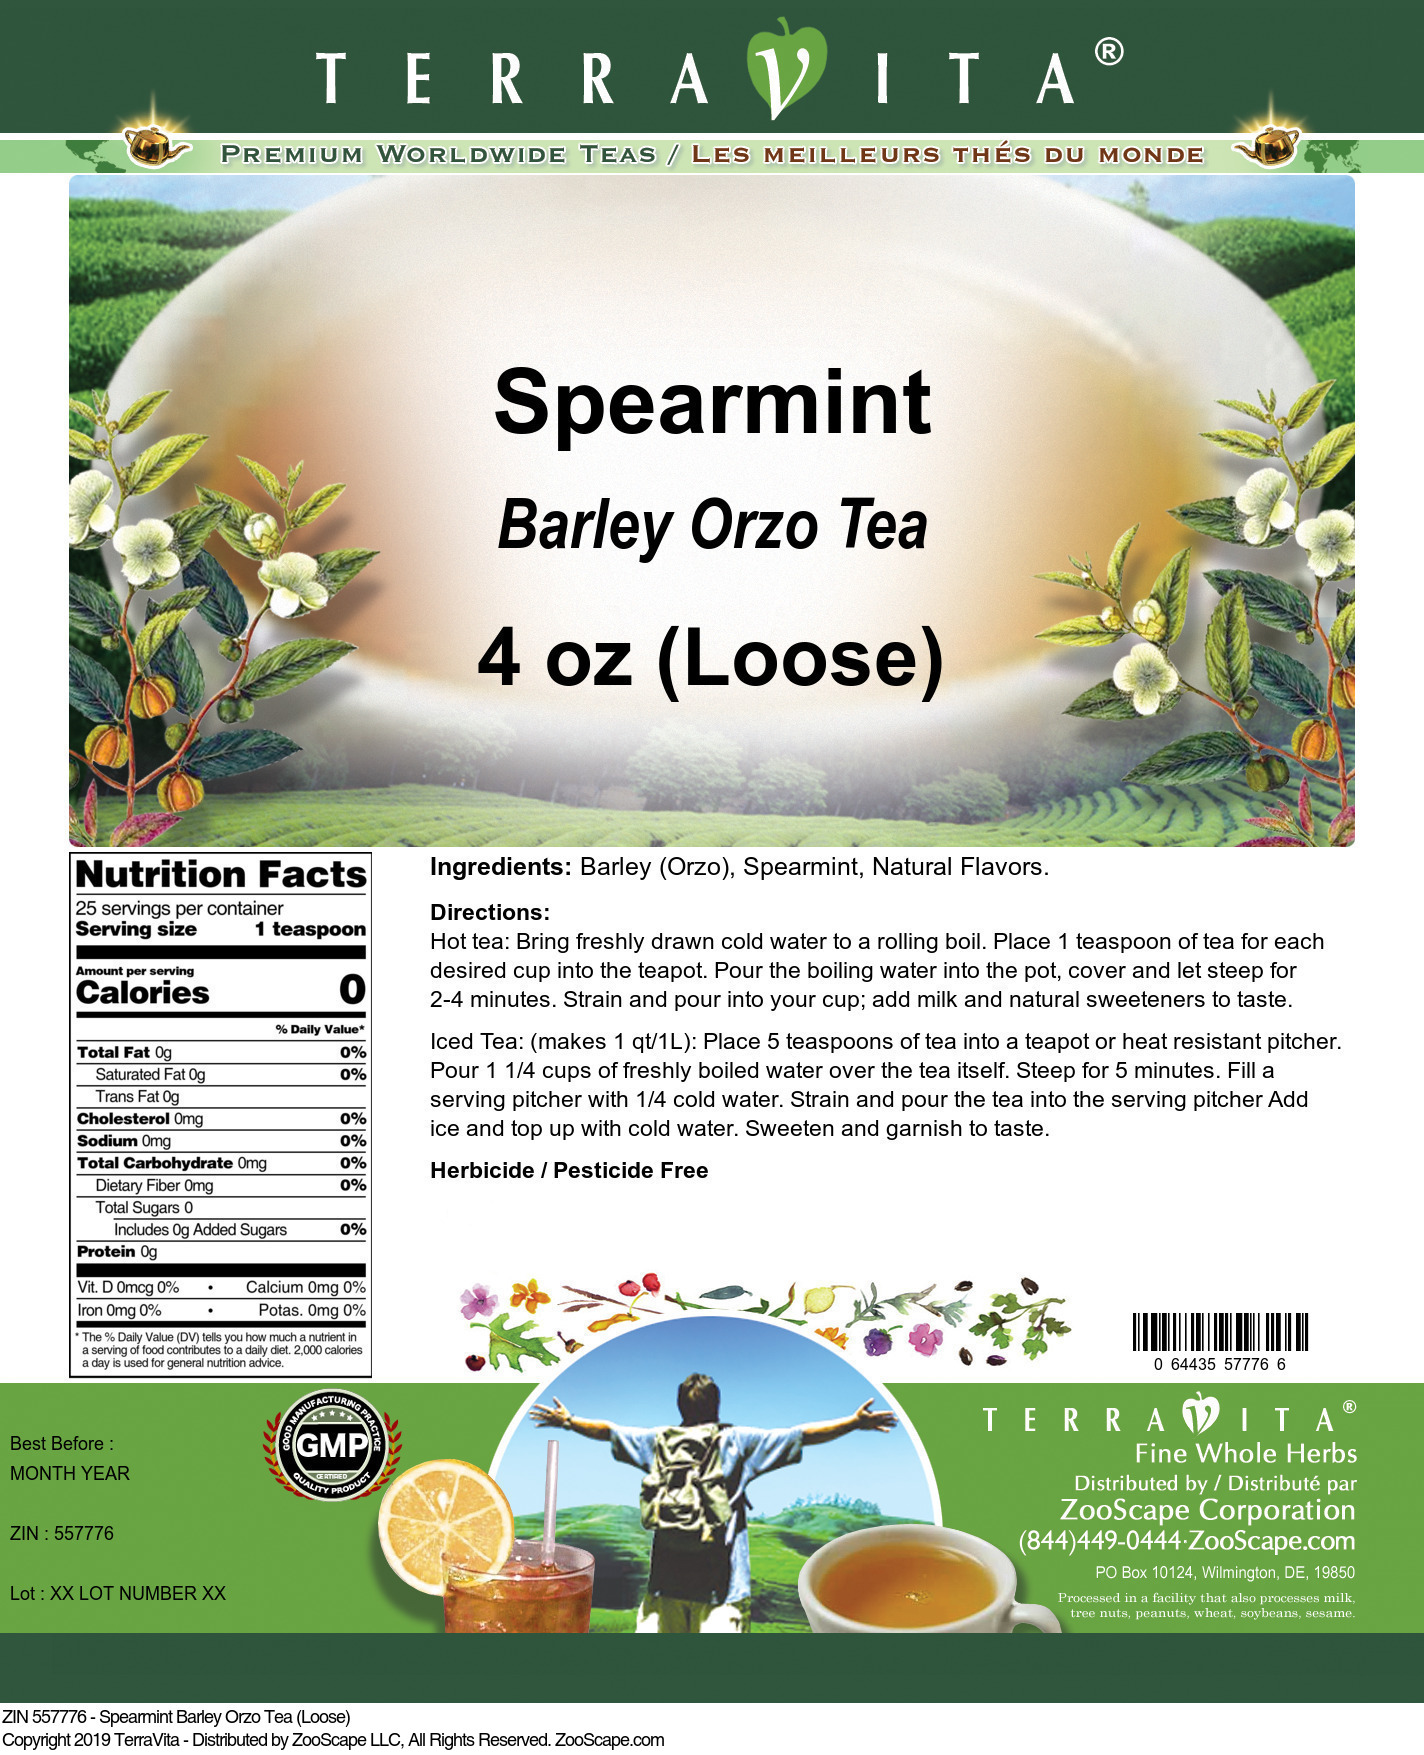 Spearmint Barley Orzo Tea (Loose) - Label